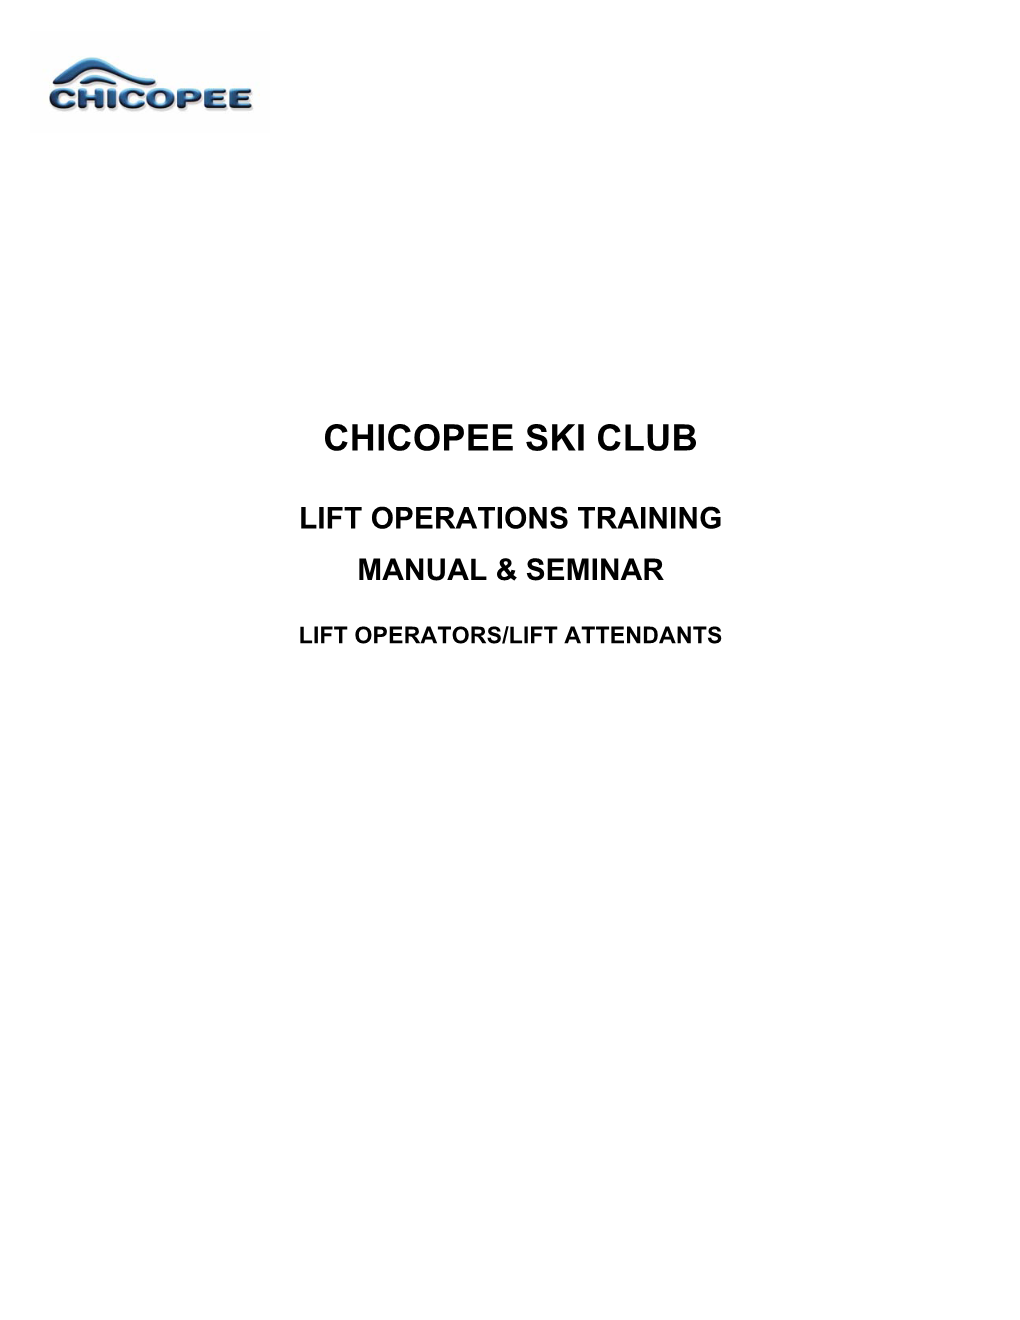 Chicopee Ski Club